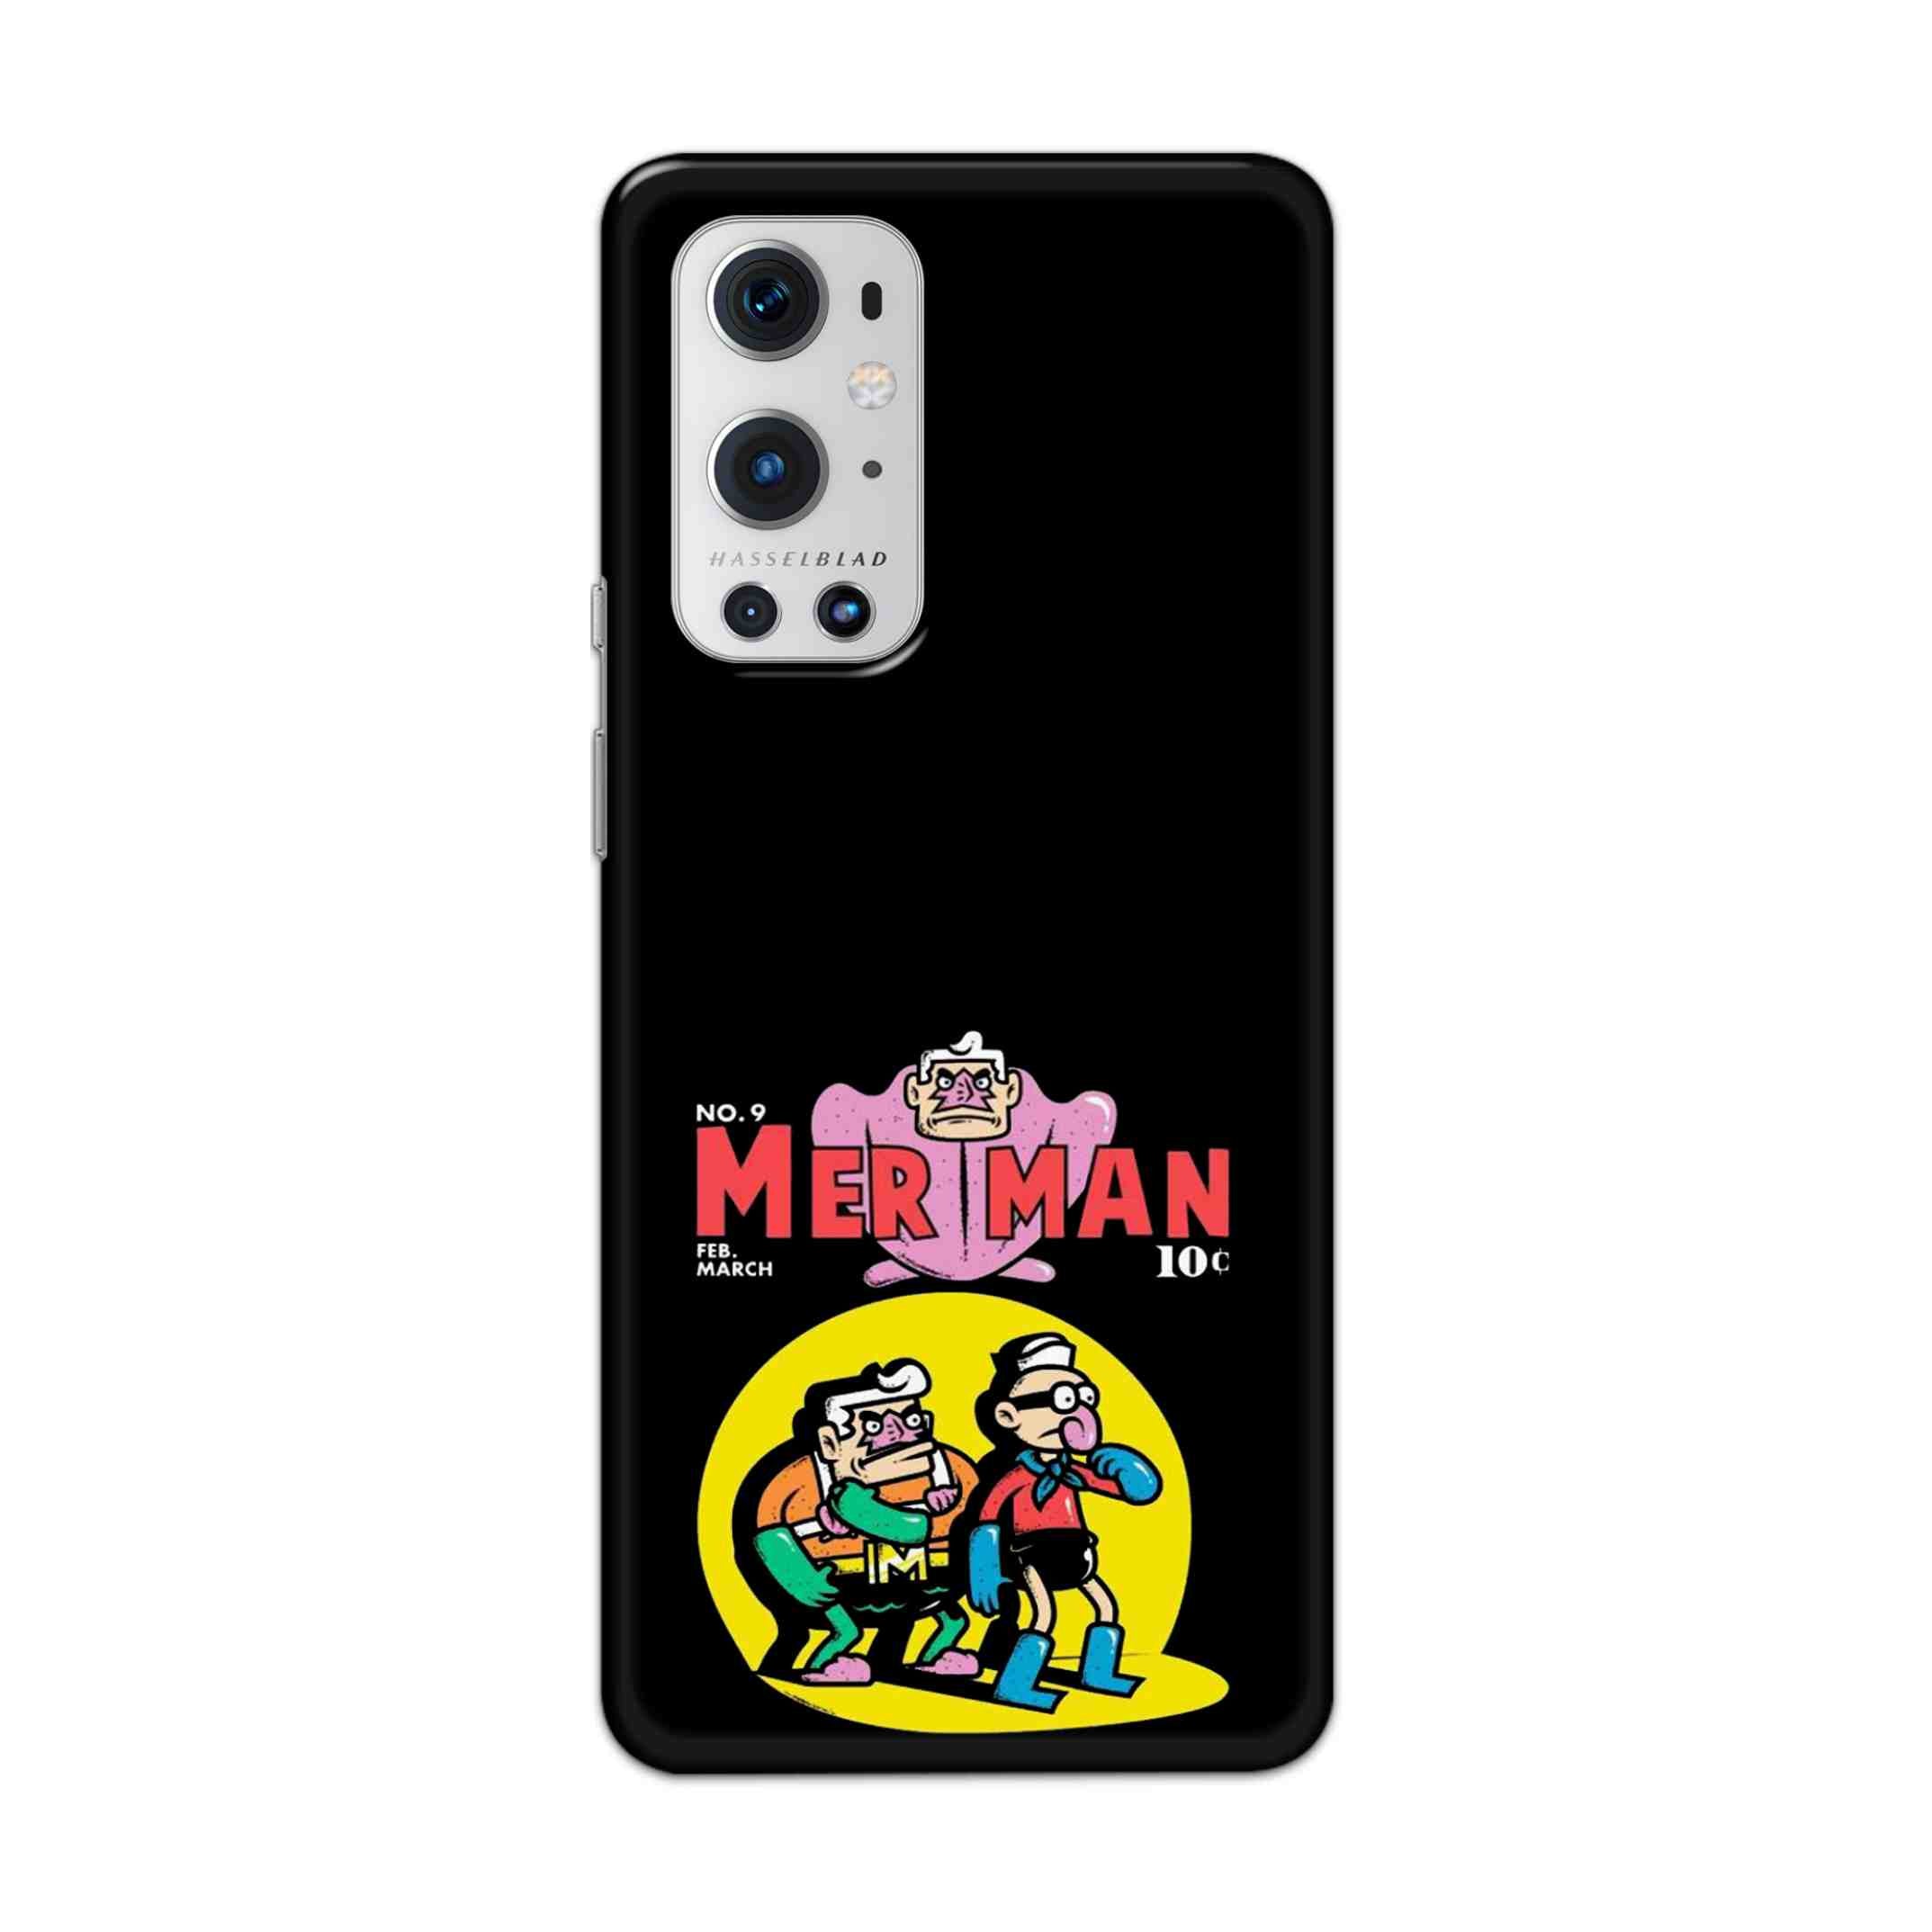 Buy Merman Hard Back Mobile Phone Case Cover For OnePlus 9 Pro Online